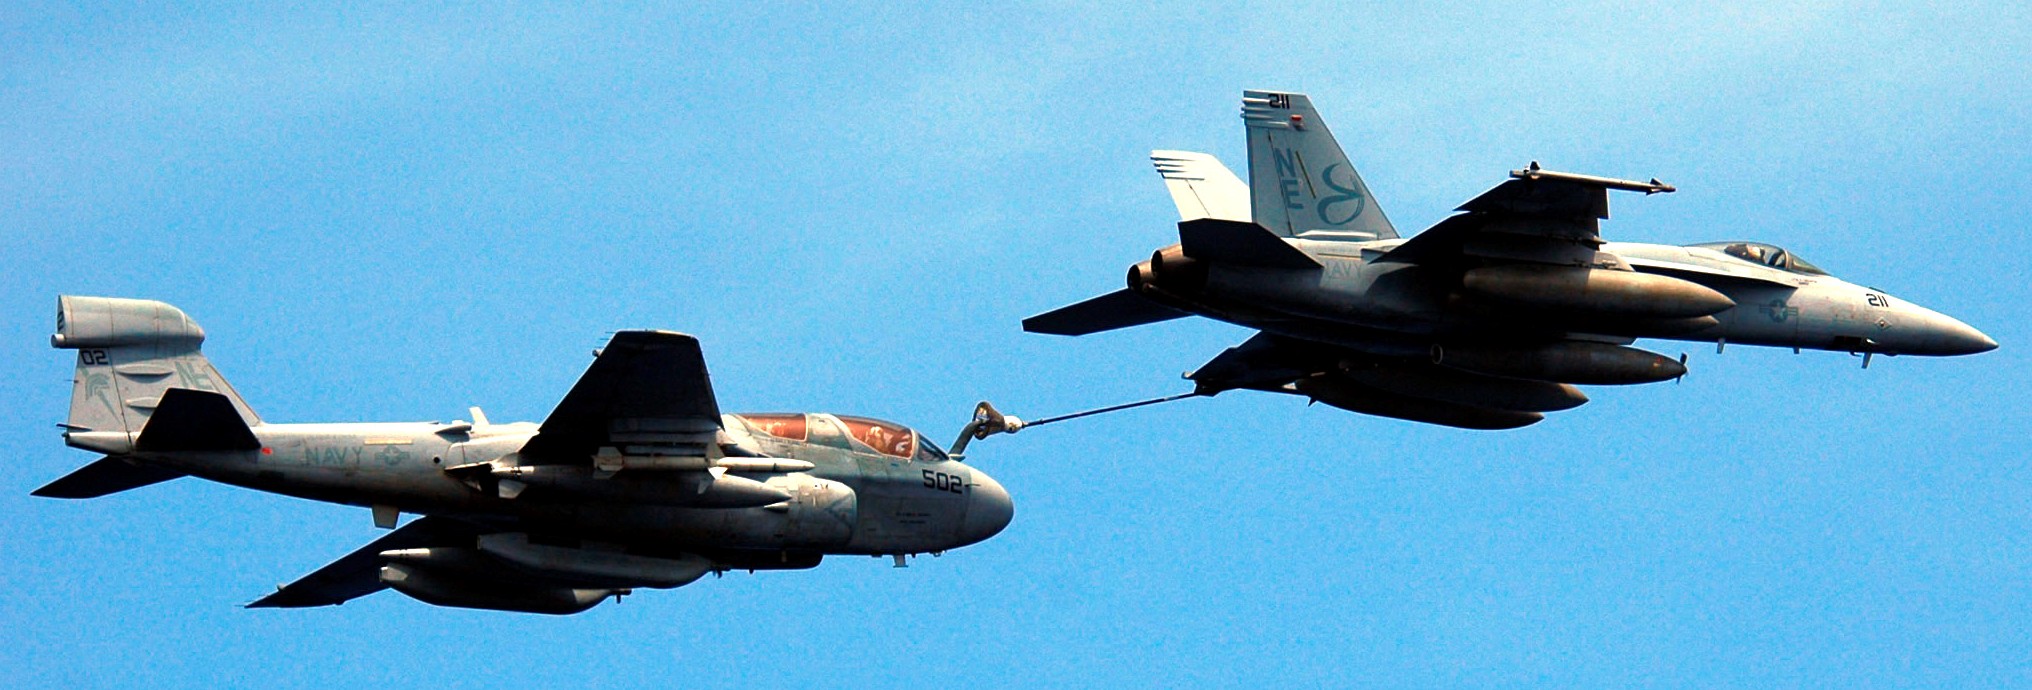 vfa-137 kestrels strike fighter squadron f/a-18e super hornet cvw-2 refueling ea-6b prowler vaq-131 2006 60